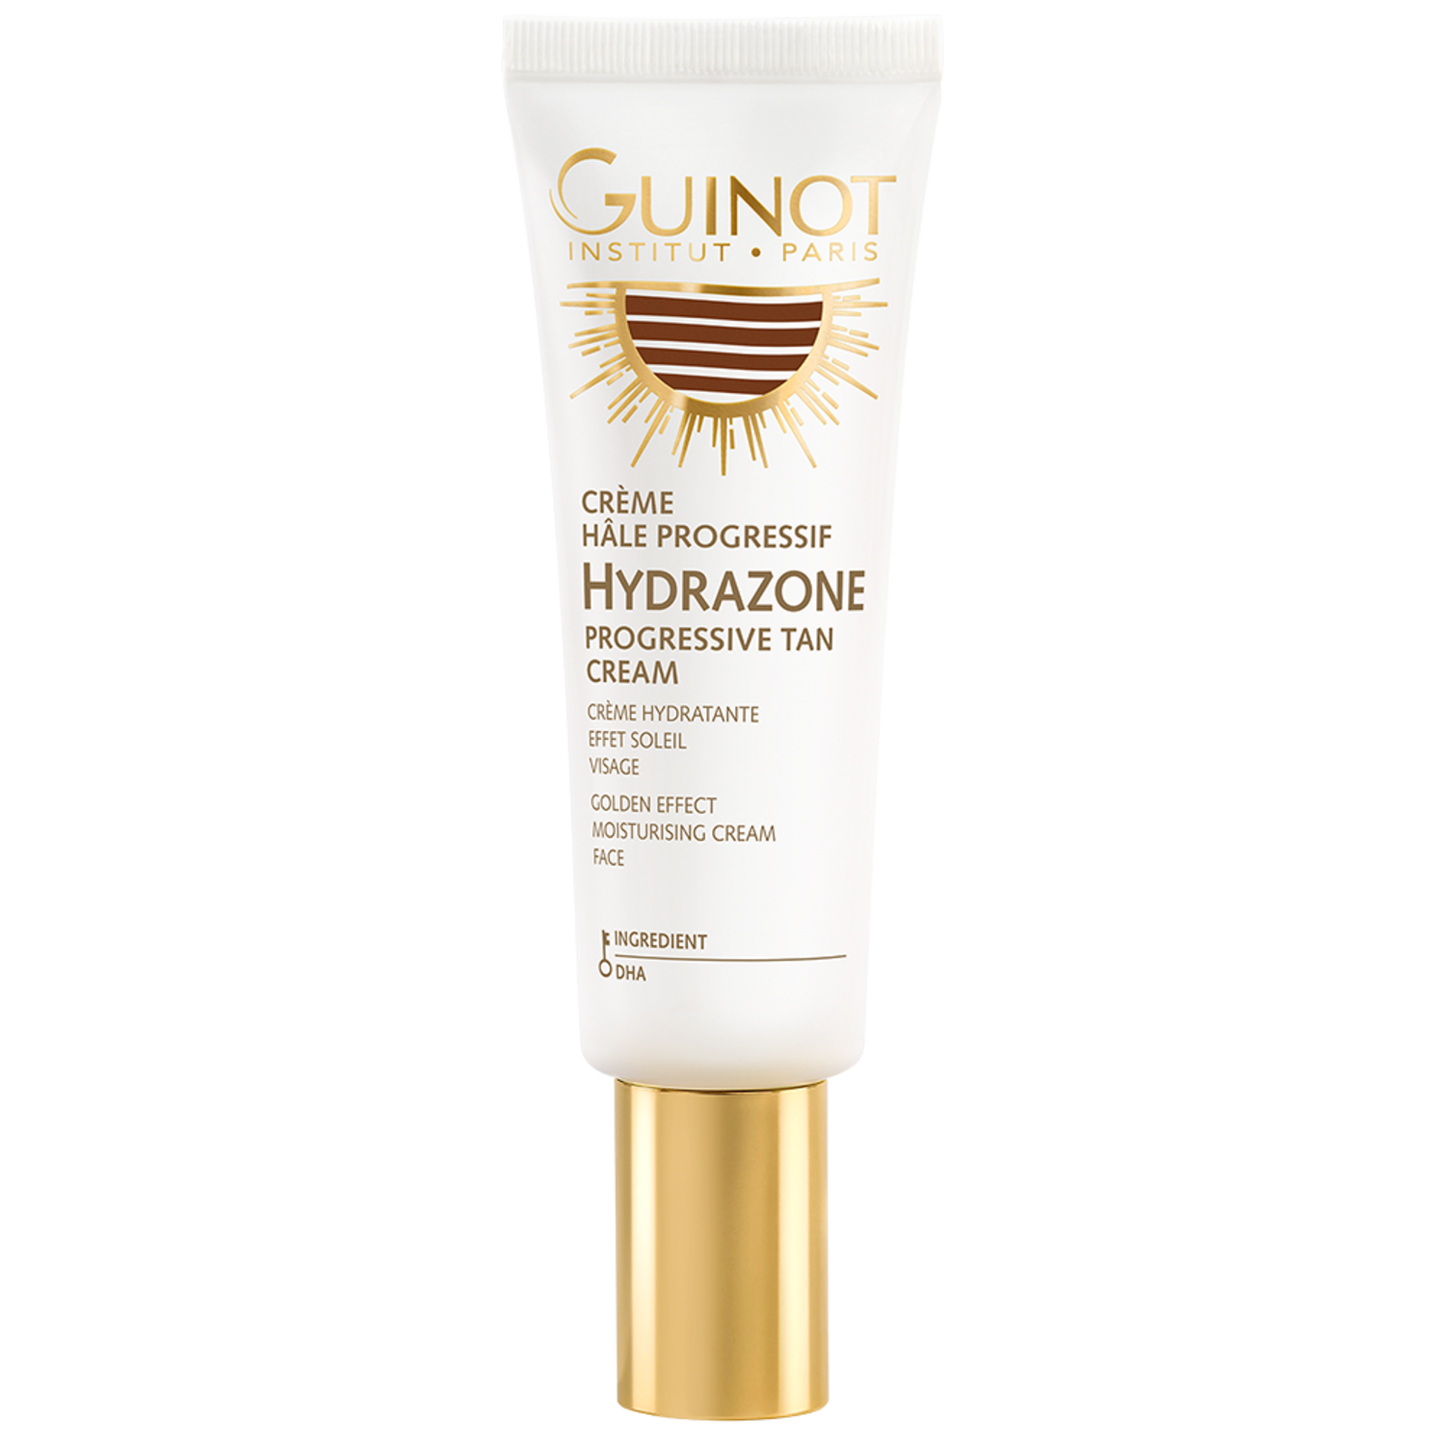 Guinot Hydrazone Gradual Self Tan Face Cream